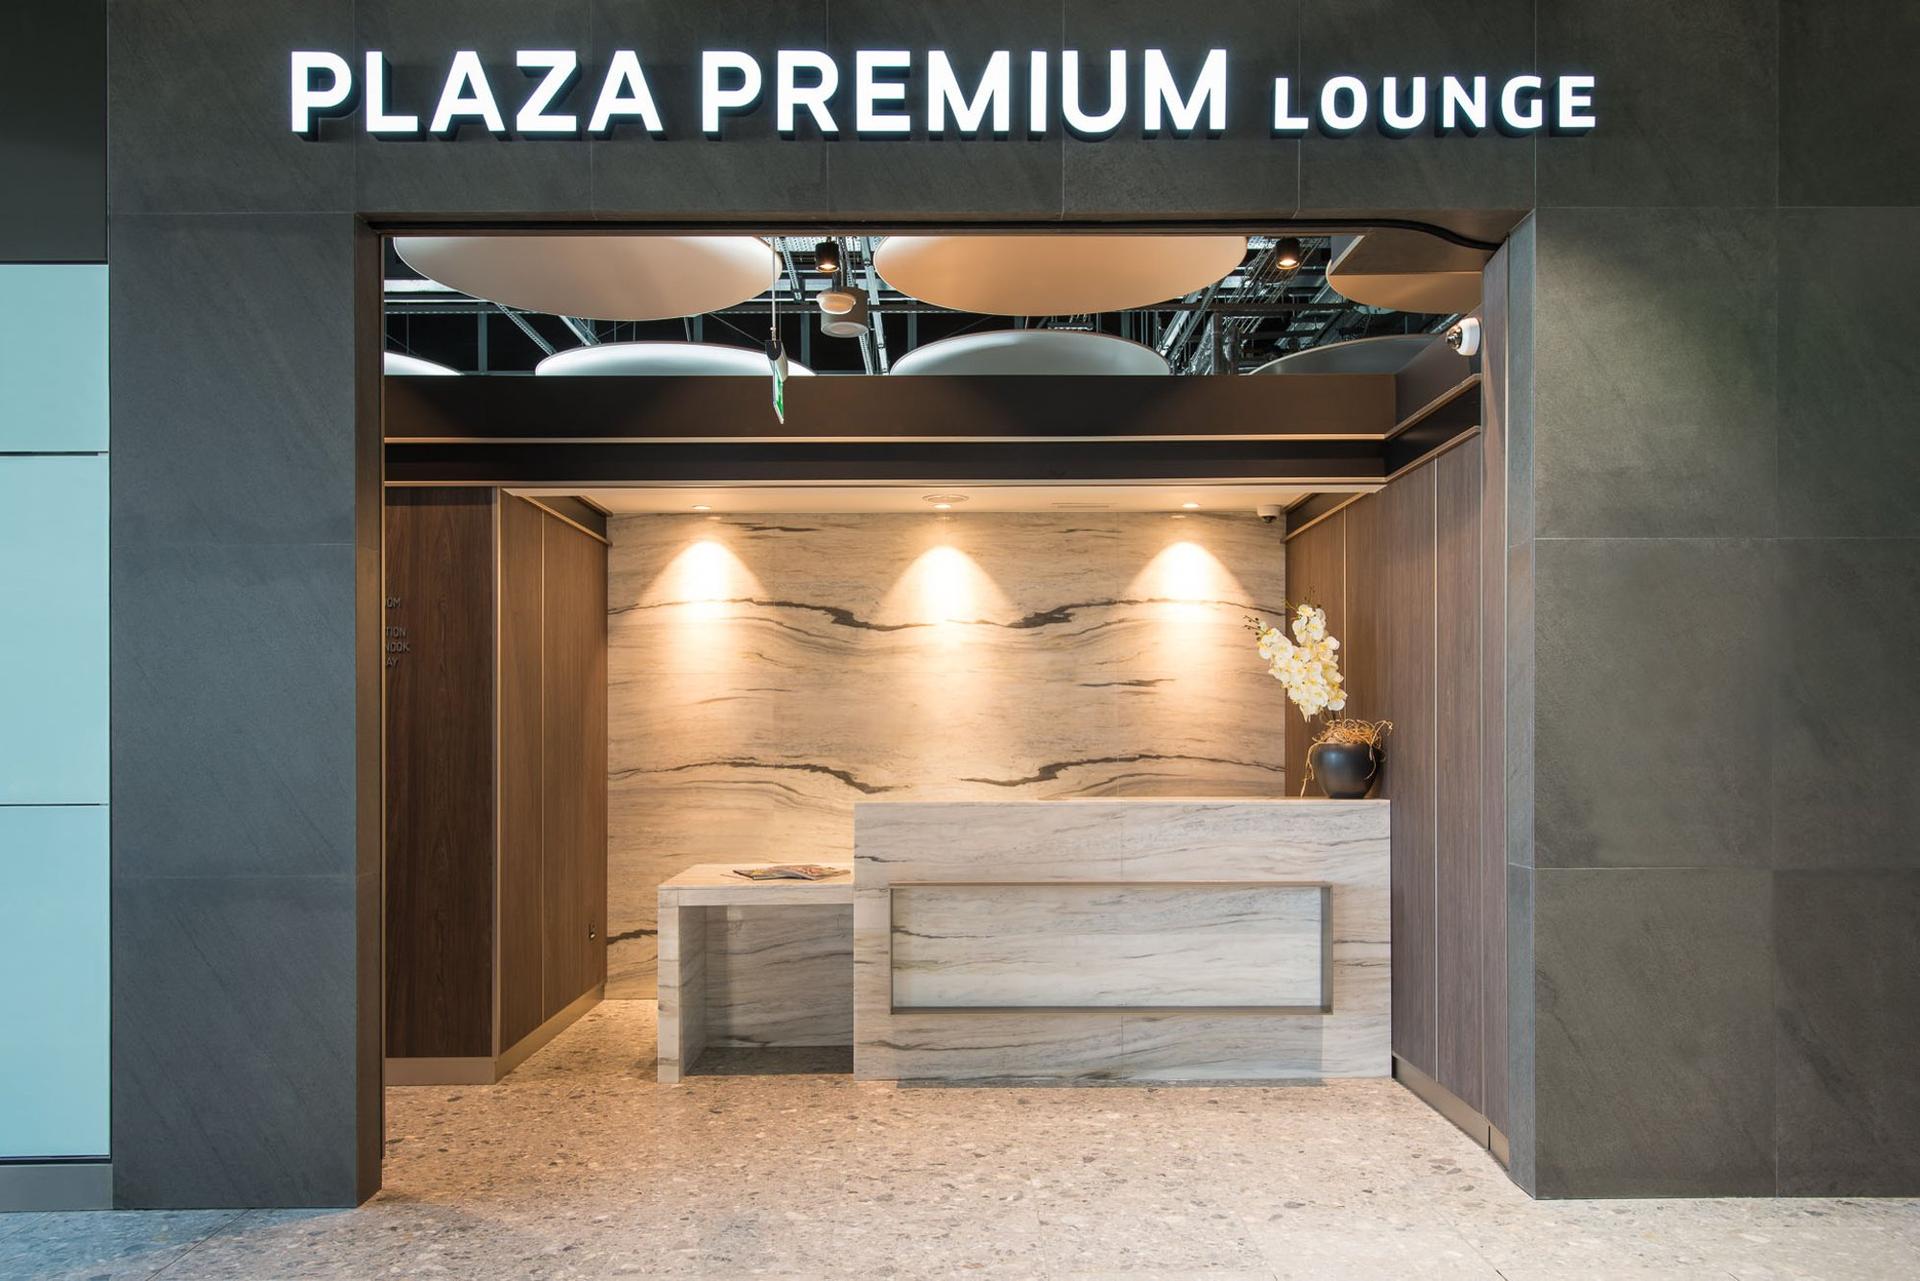 Plaza Premium Lounge image 62 of 65